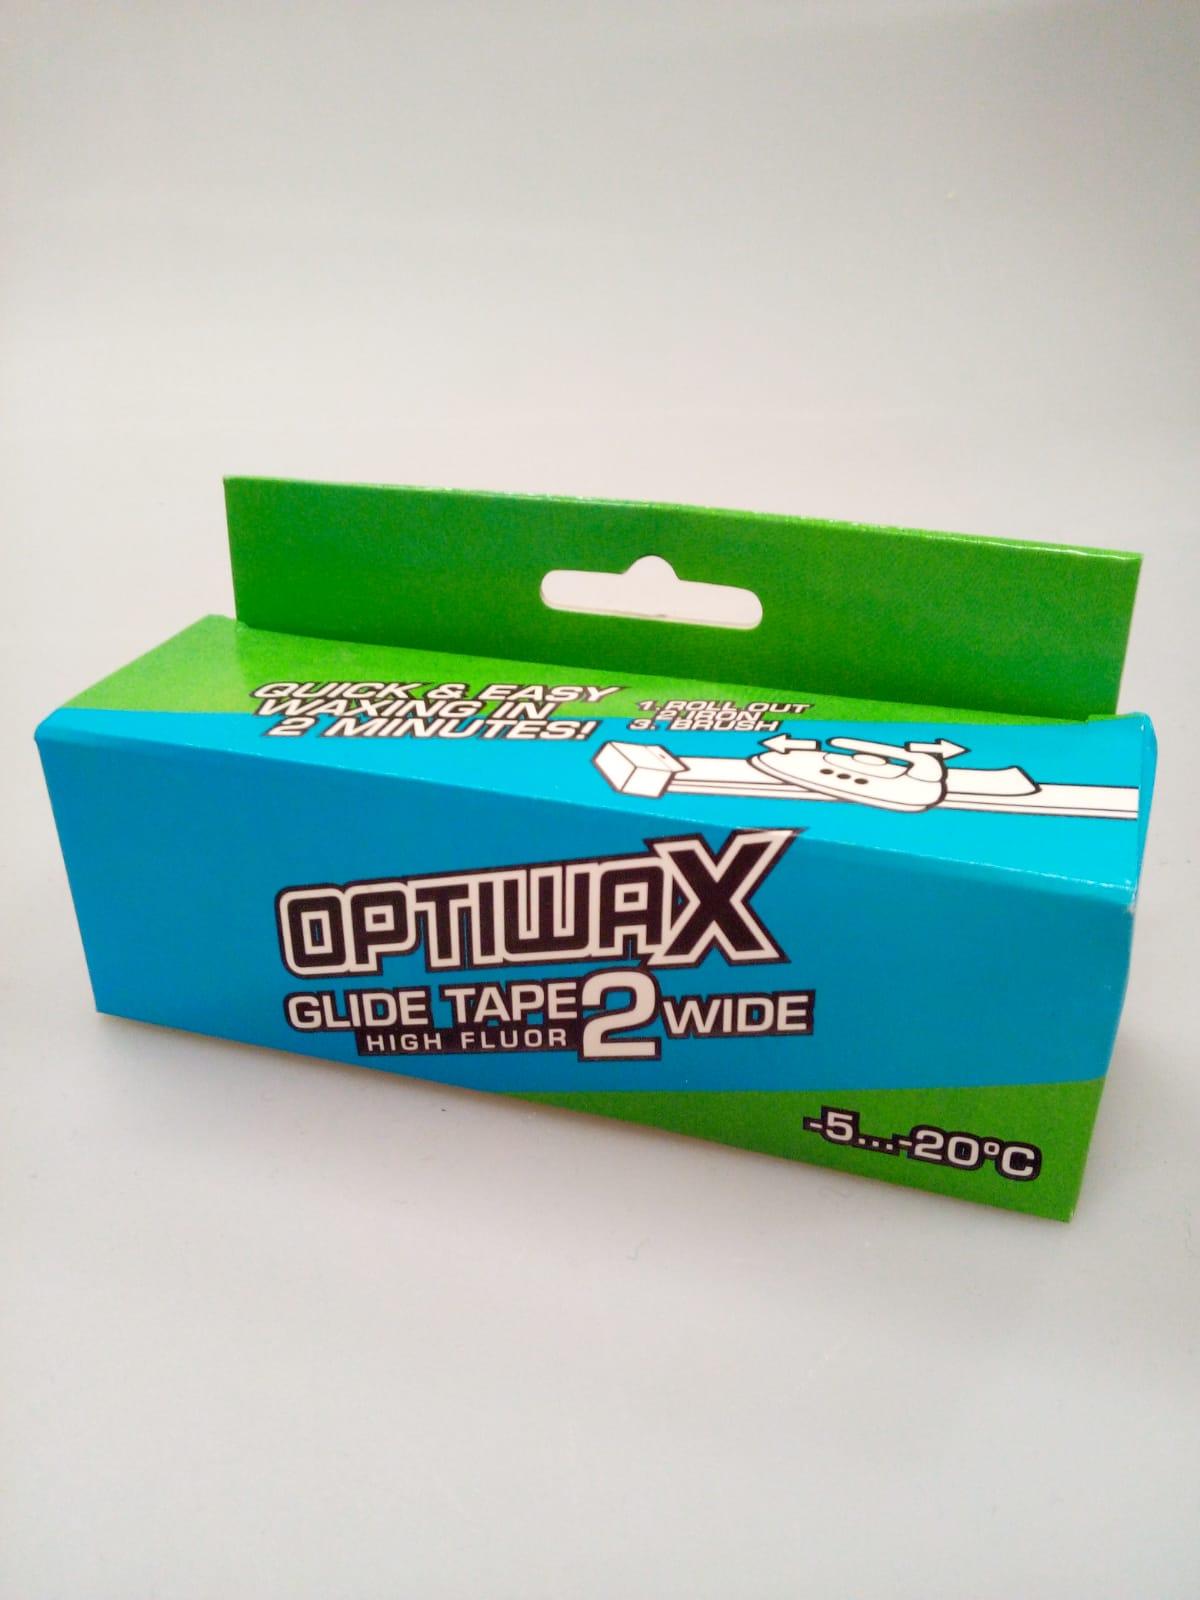 Optiwax Optiwax glide tape 2 wide